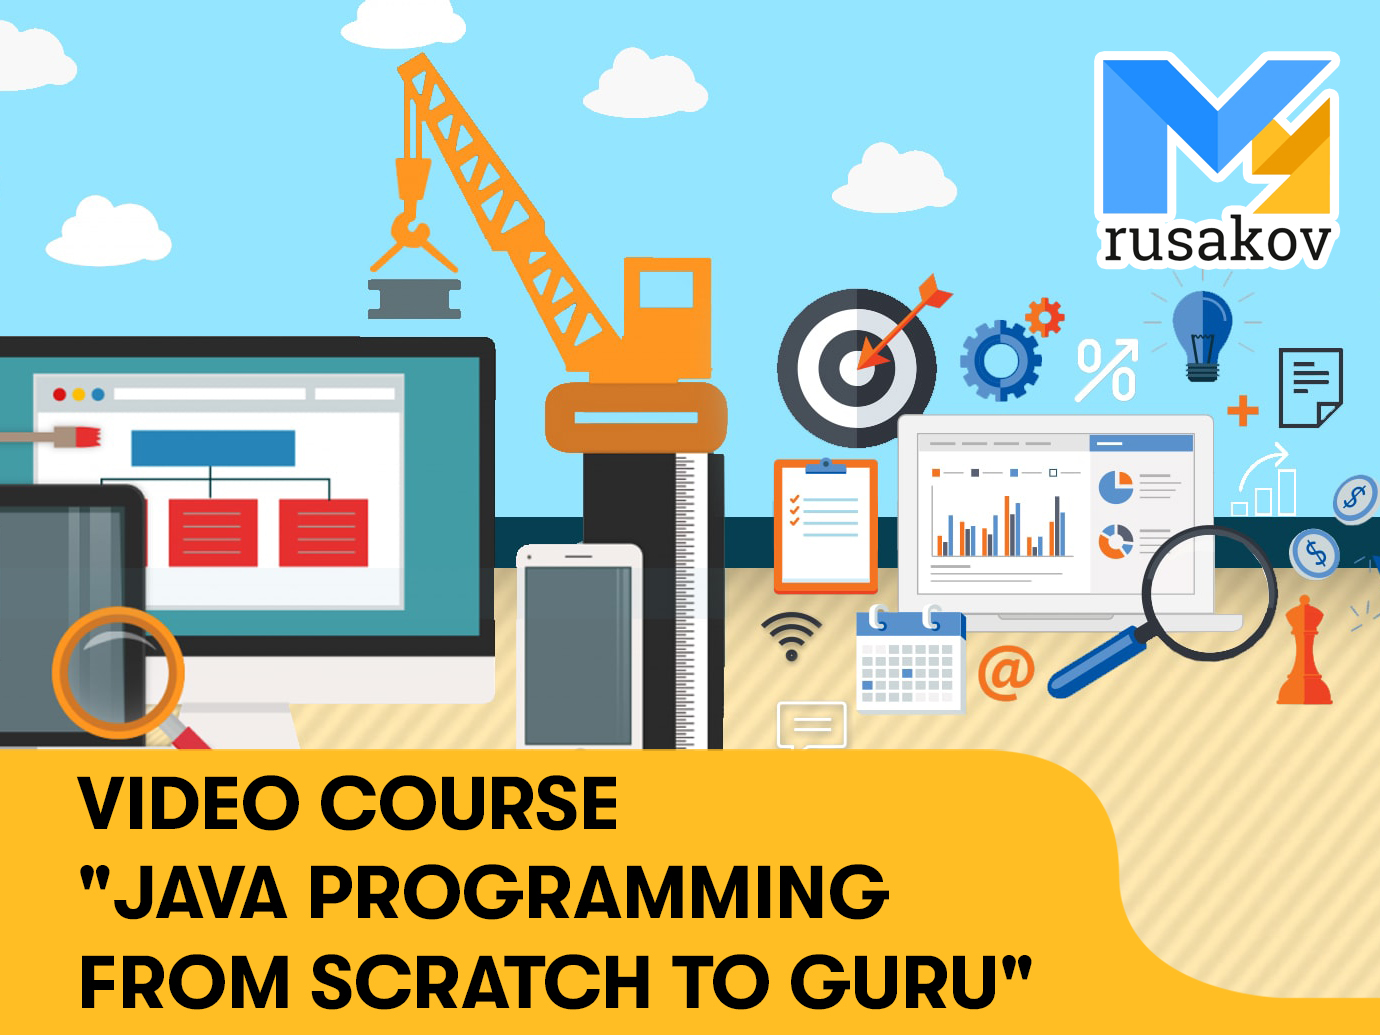 Video course “Java Programming from Scratch to Guru“